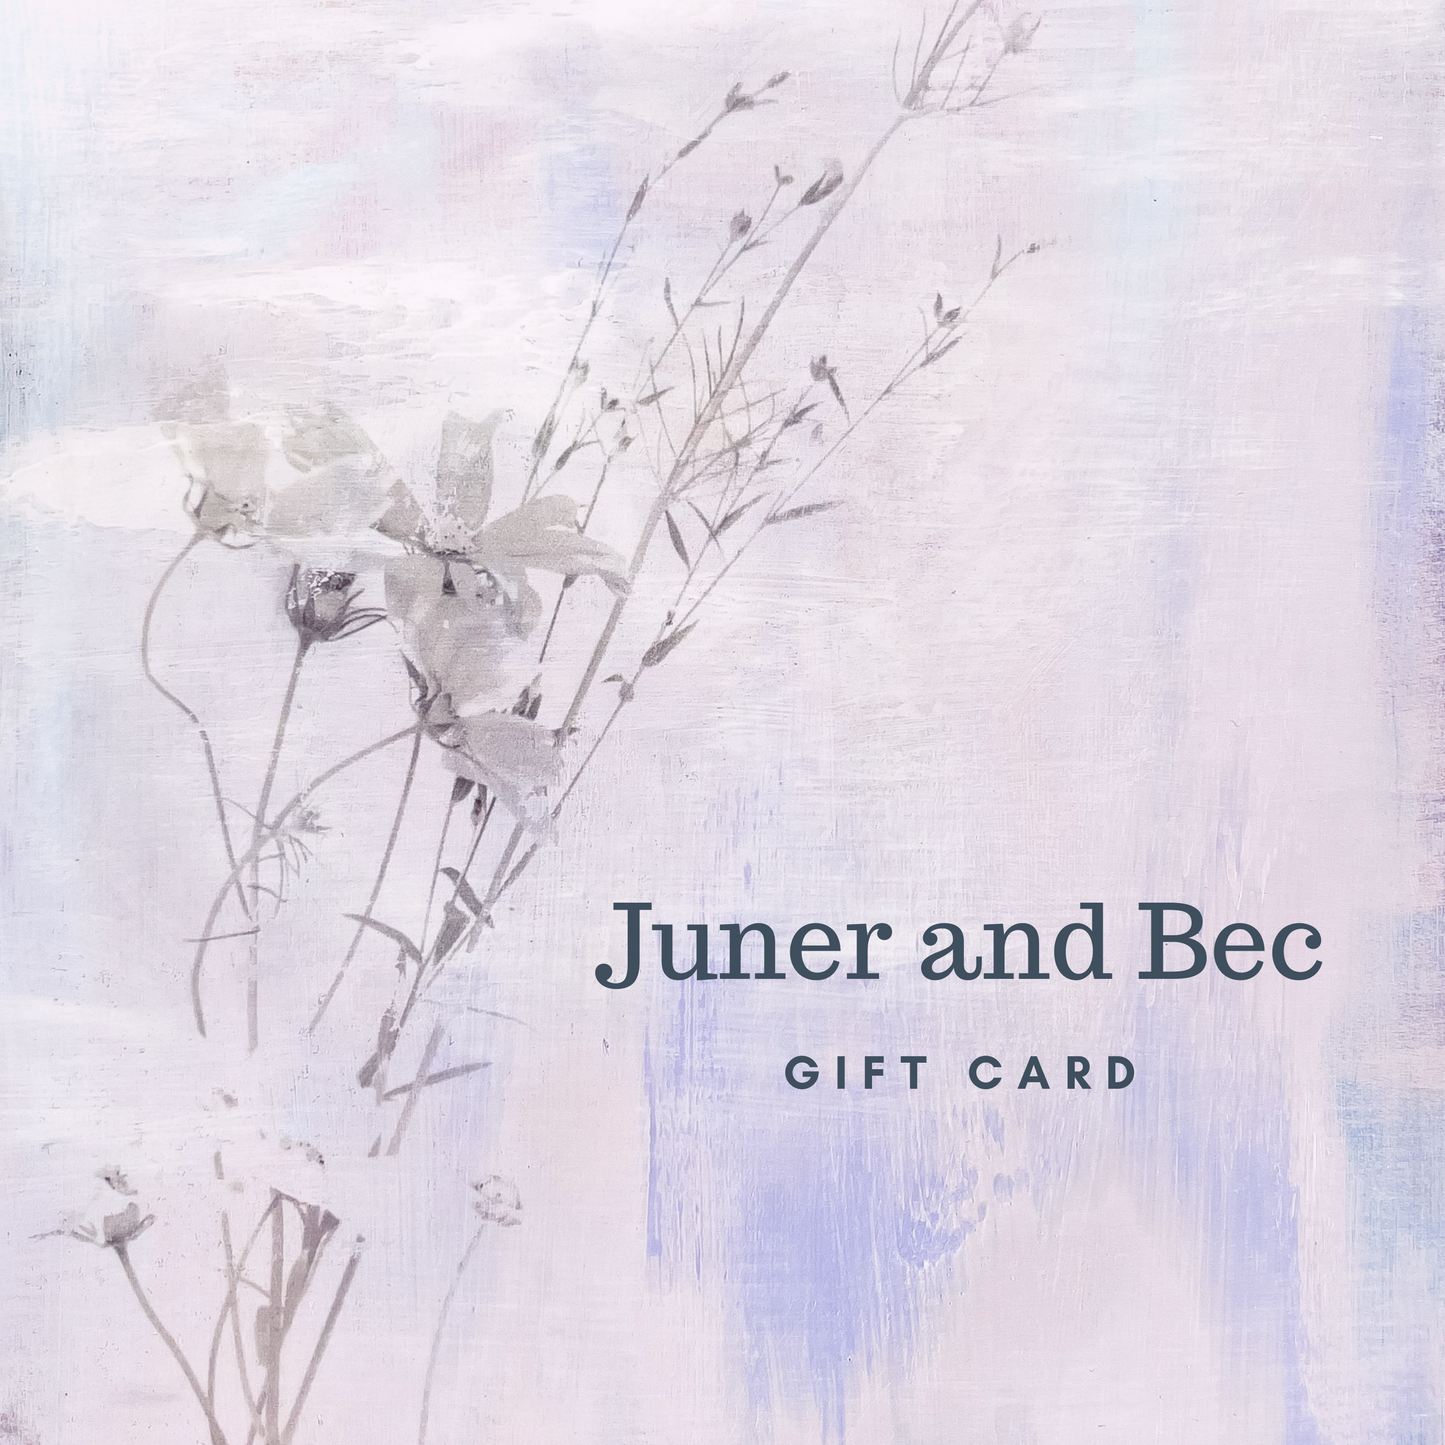 Juner and Bec Gift Card